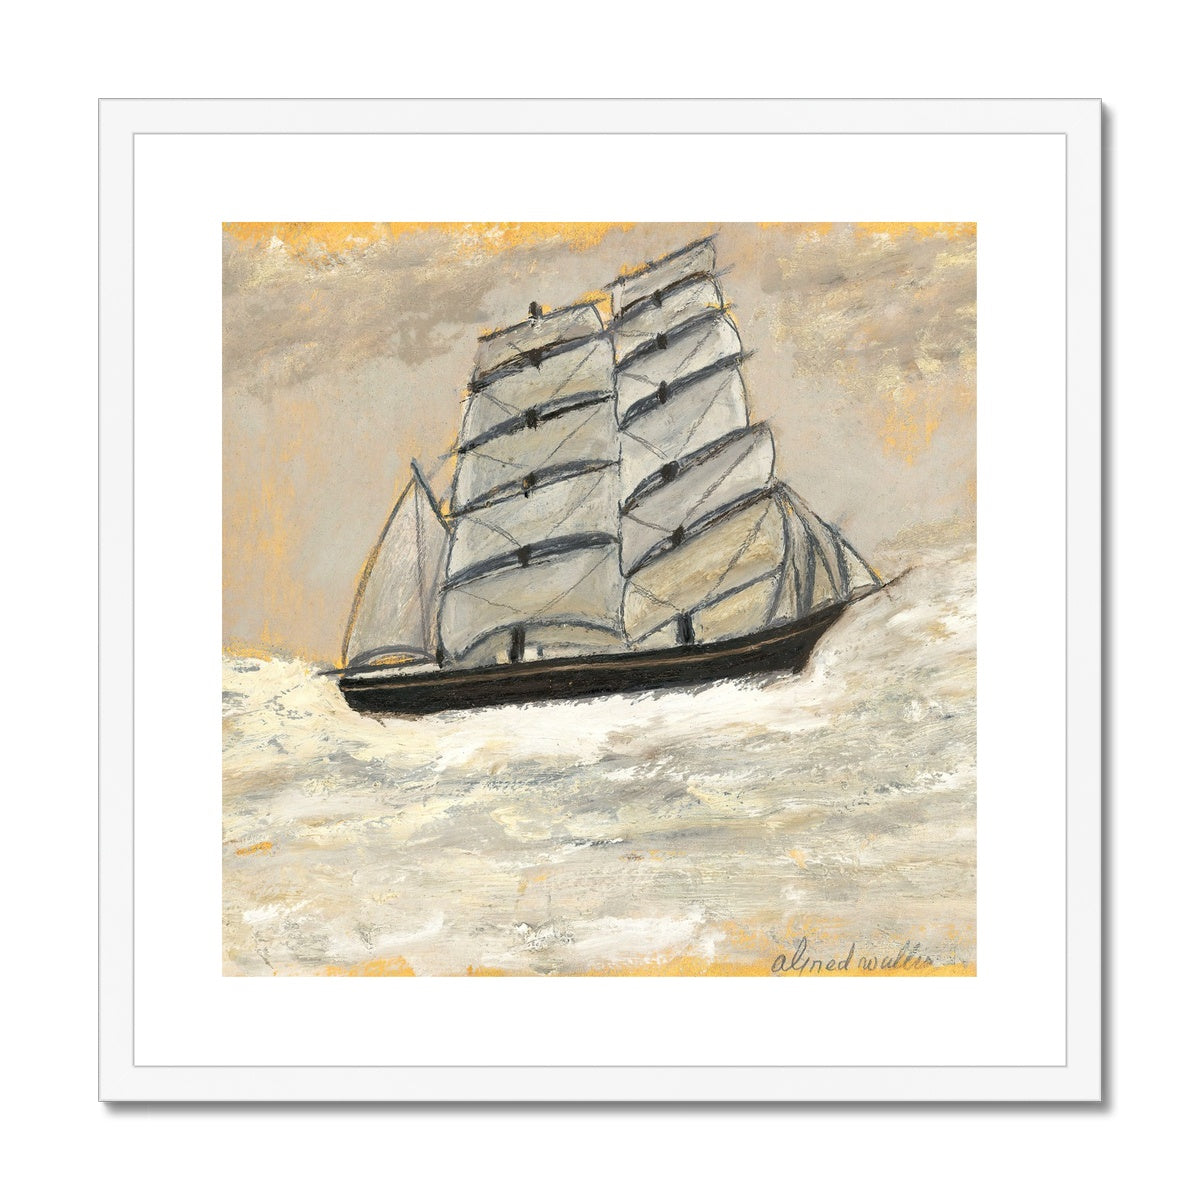 Alfred Wallis Framed Open Edition Cornish Art Print. 'Sailing Ship in a Stormy Sea'. Cornwall Art Gallery Historic Art